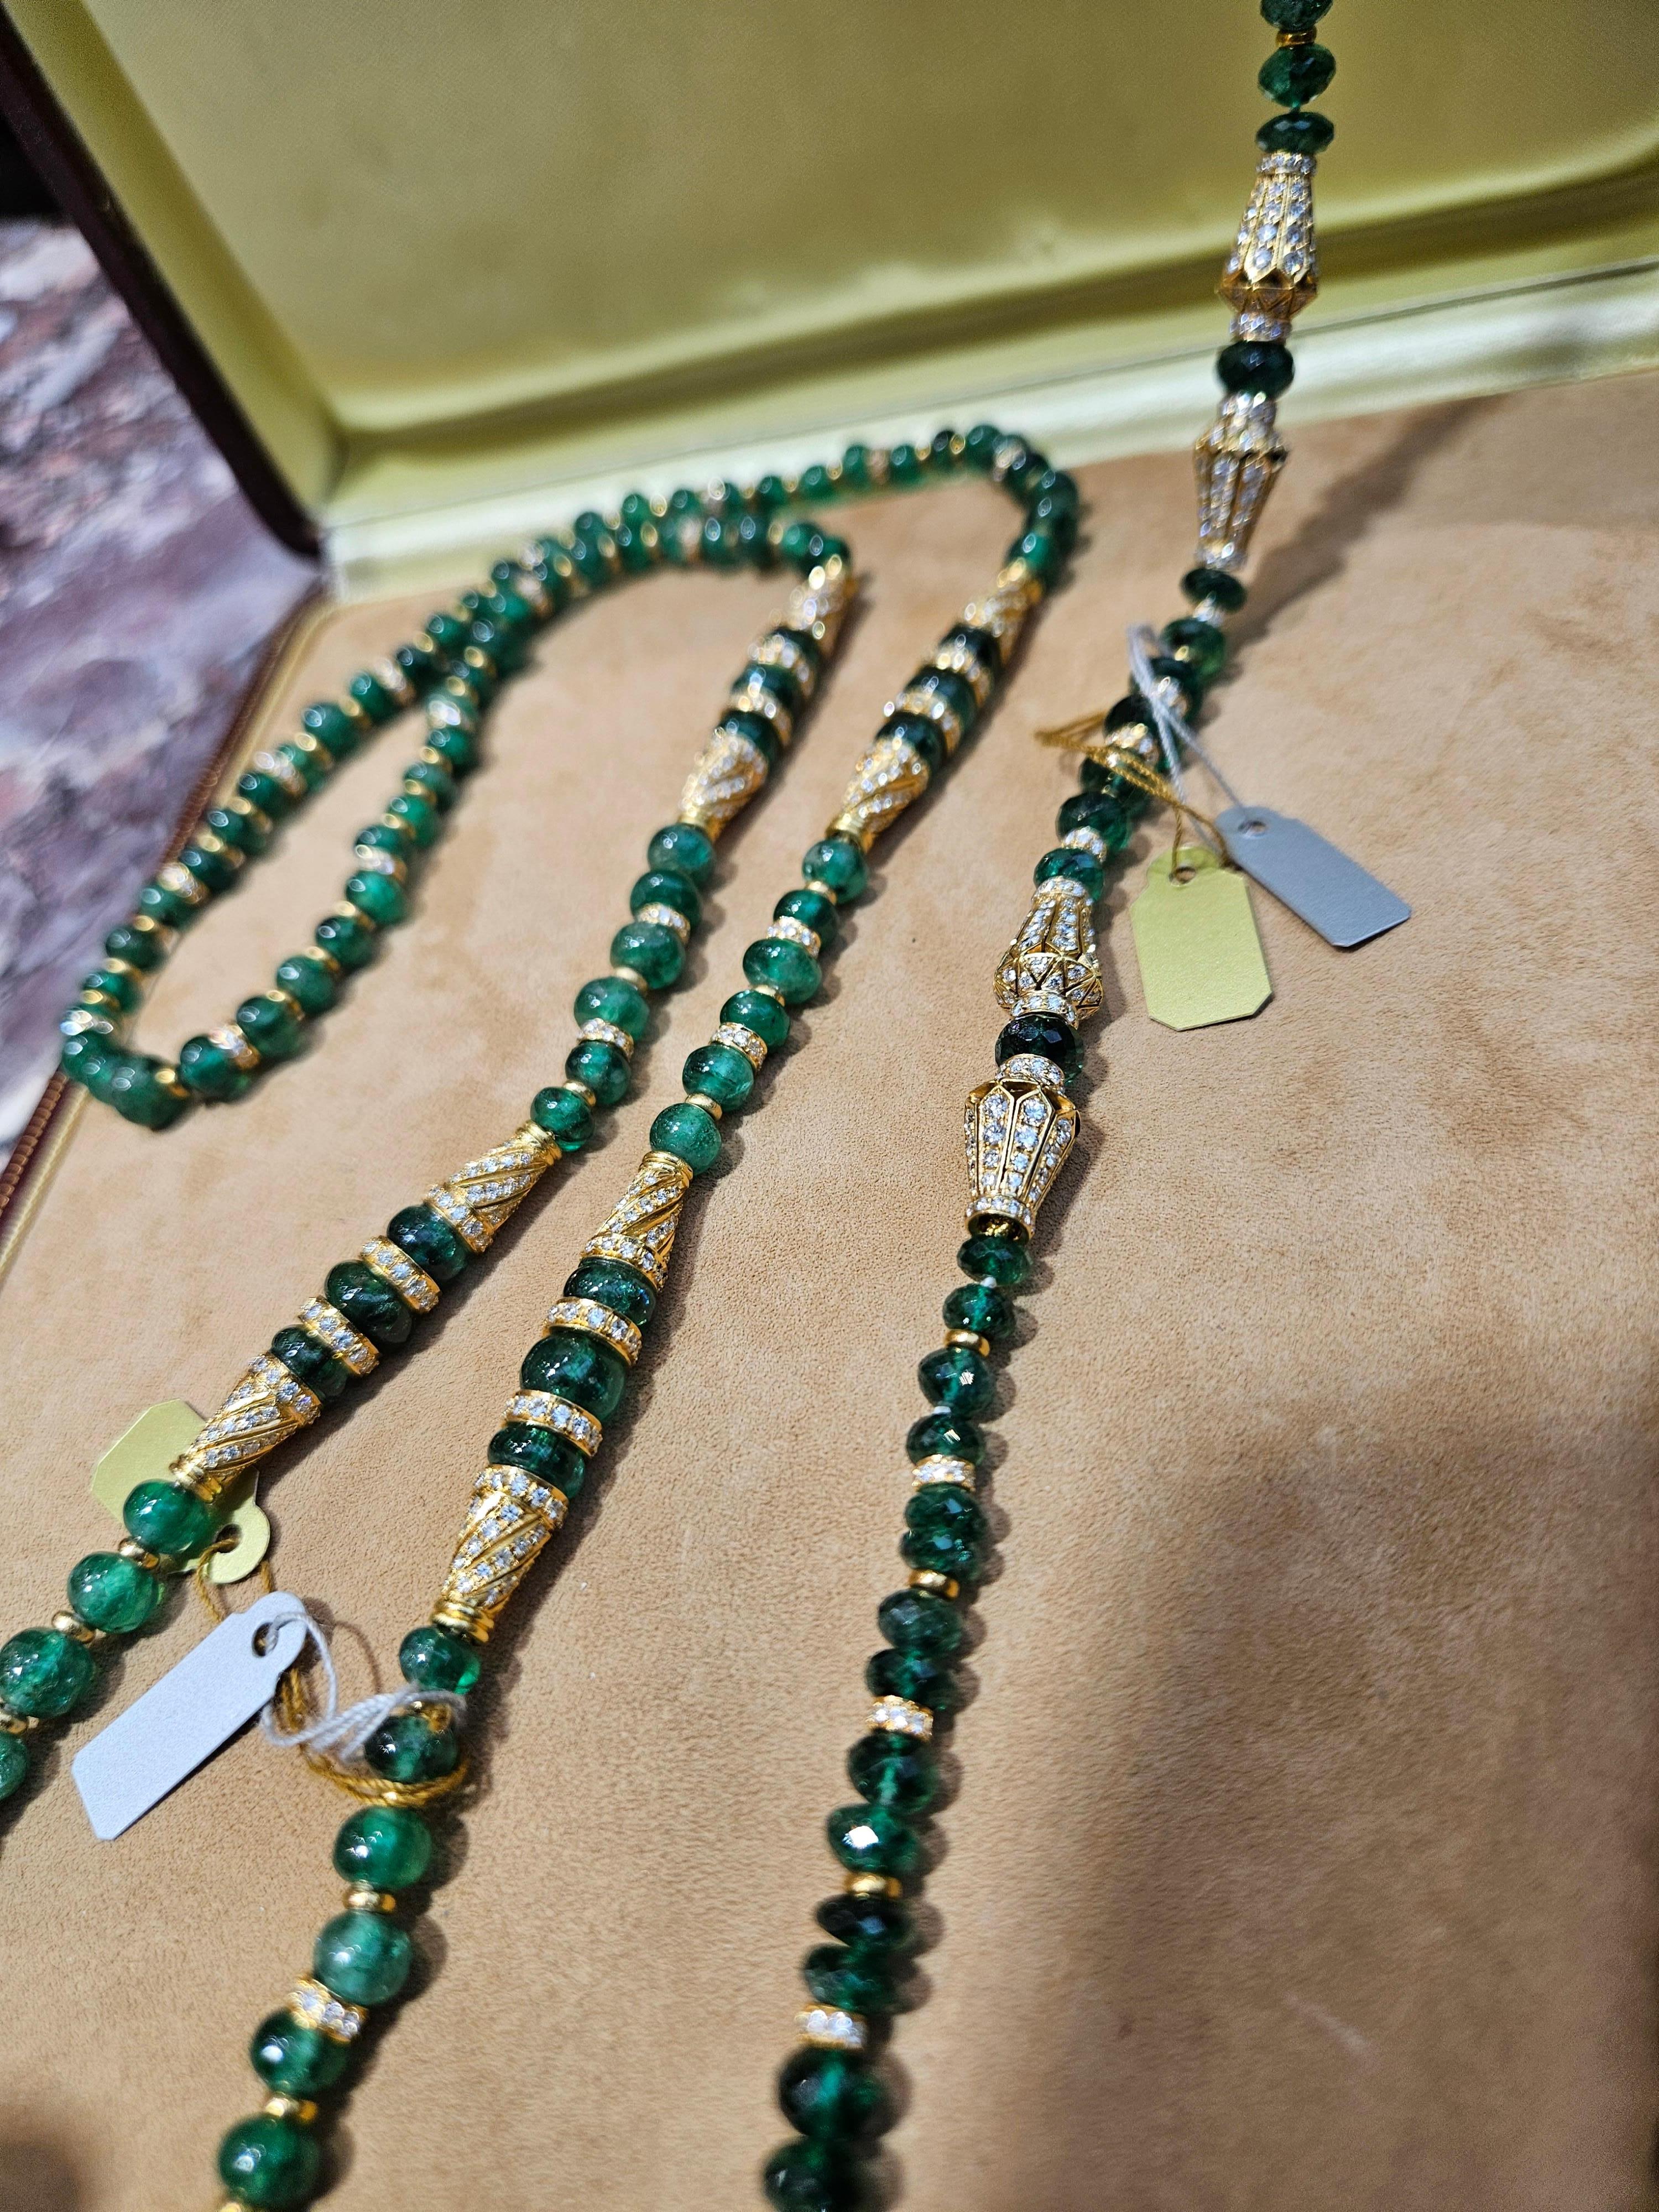 Adler Genèva 18kt Gold Necklaces 480ct Faceted Bead Emeralds CGL Certified For Sale 12